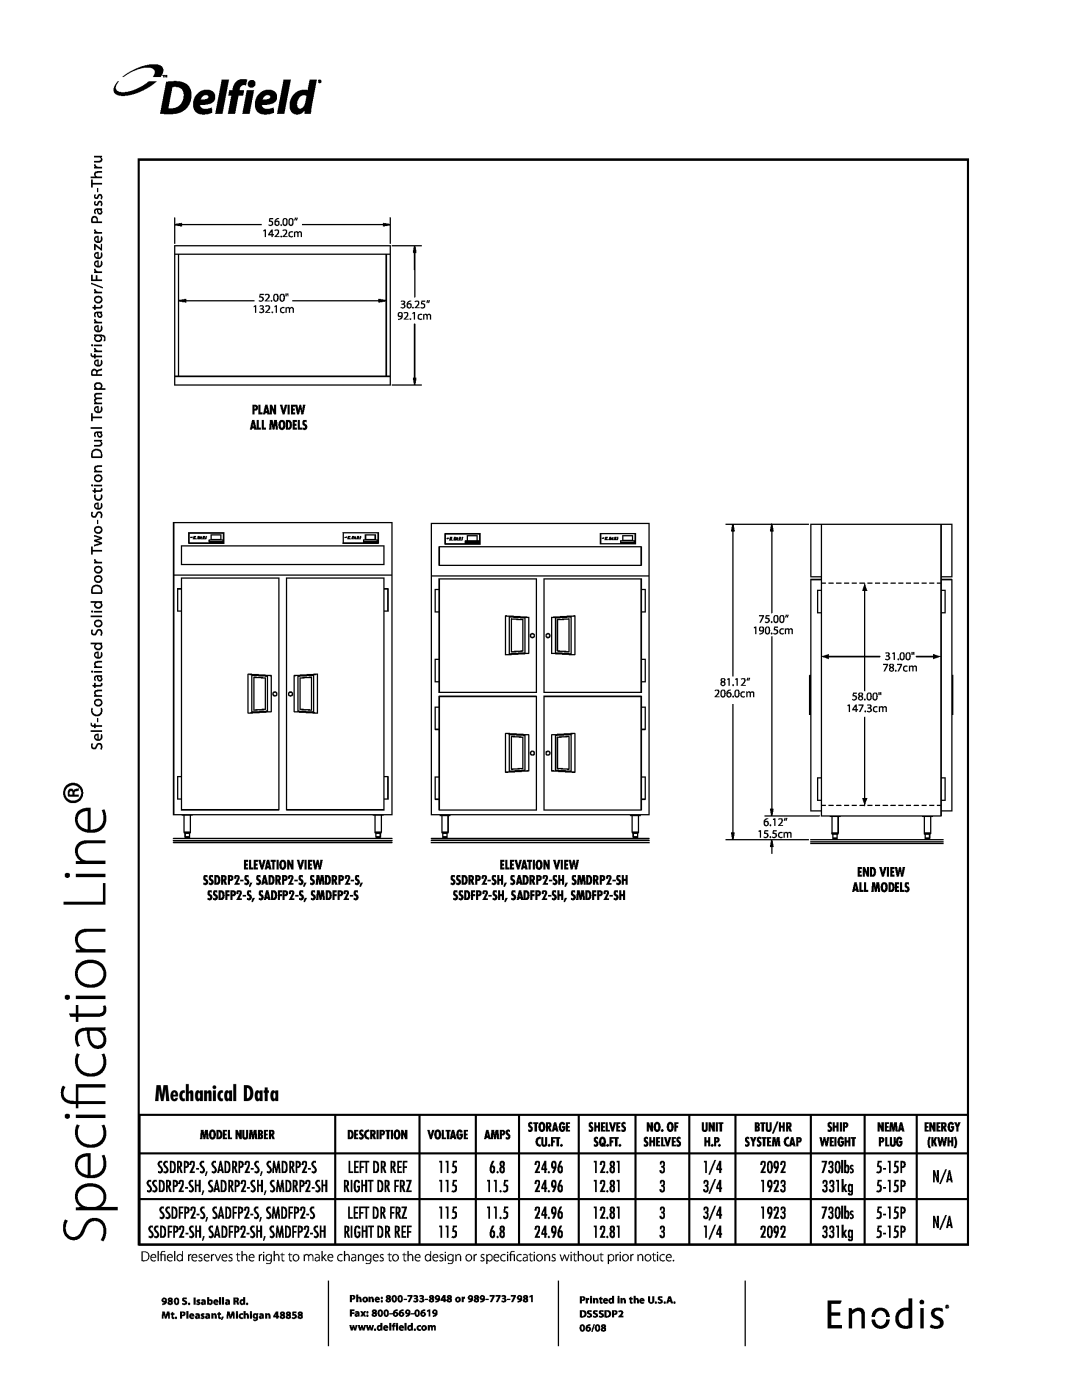 Delfield SSDP2-S Specification, Delfield, Mechanical Data, Temp Refrigerator/Freezer Pass-Thru, 5-15P, End View All Models 